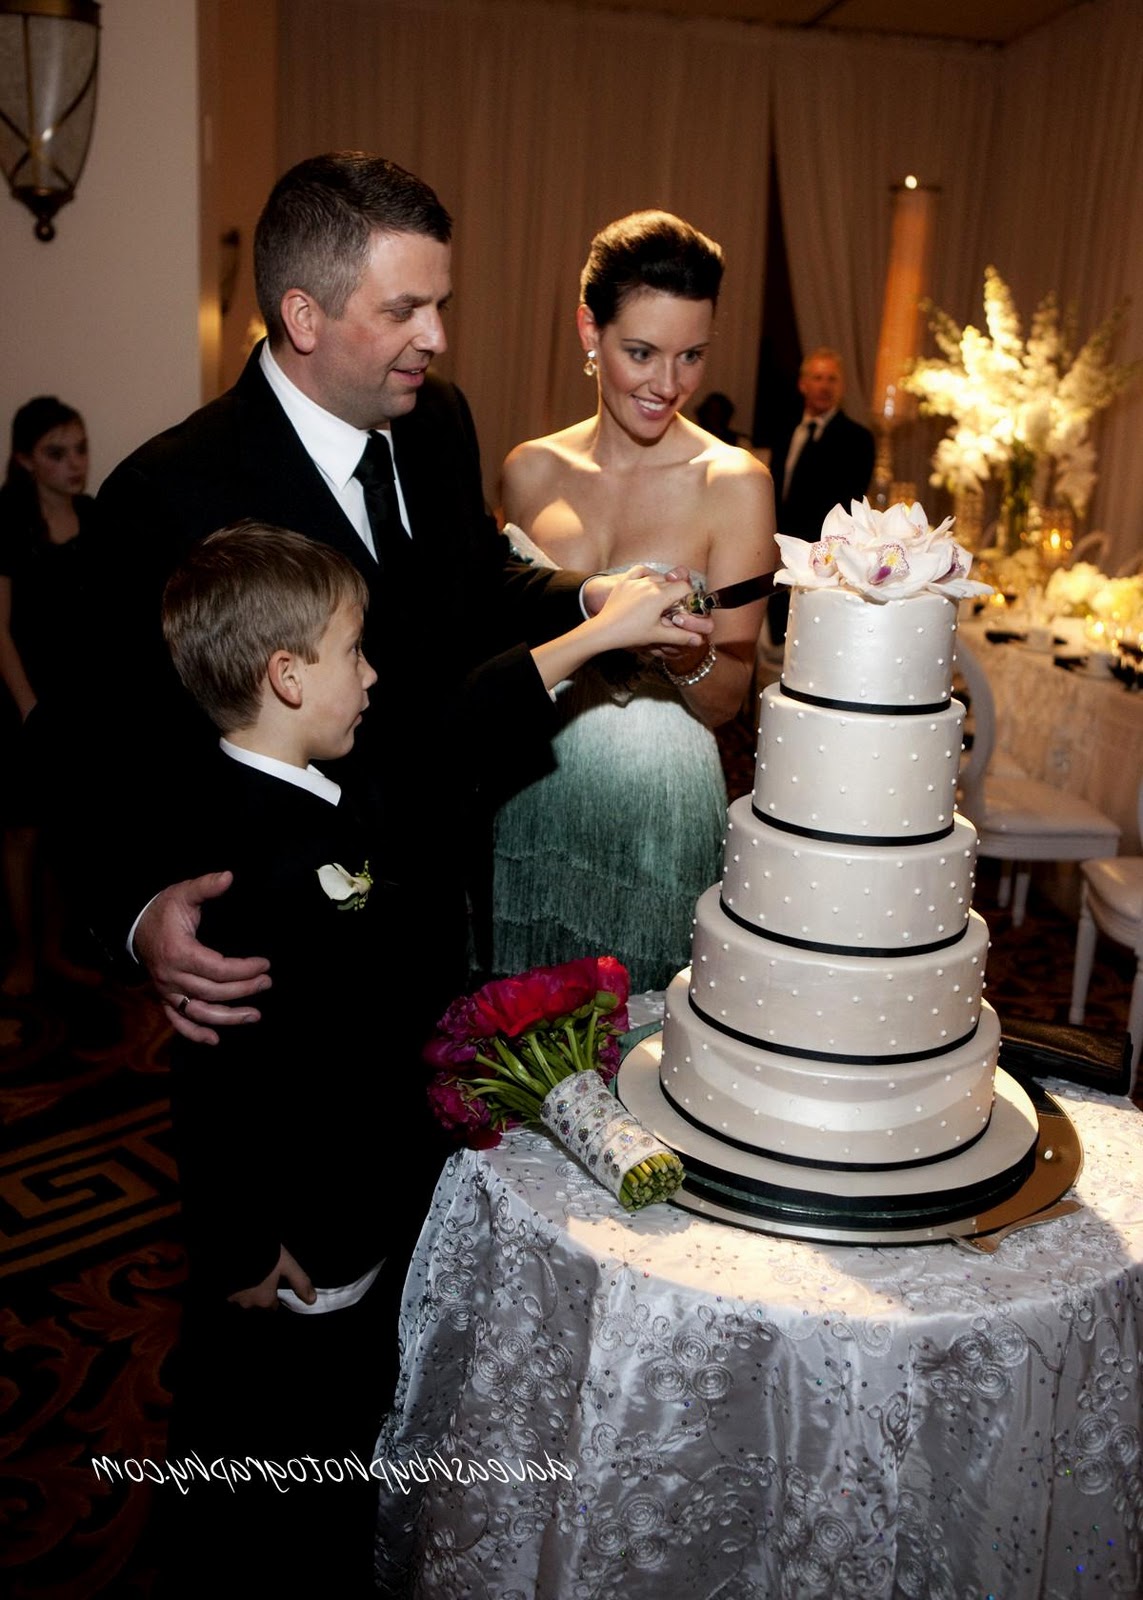 wedding cake cutting!